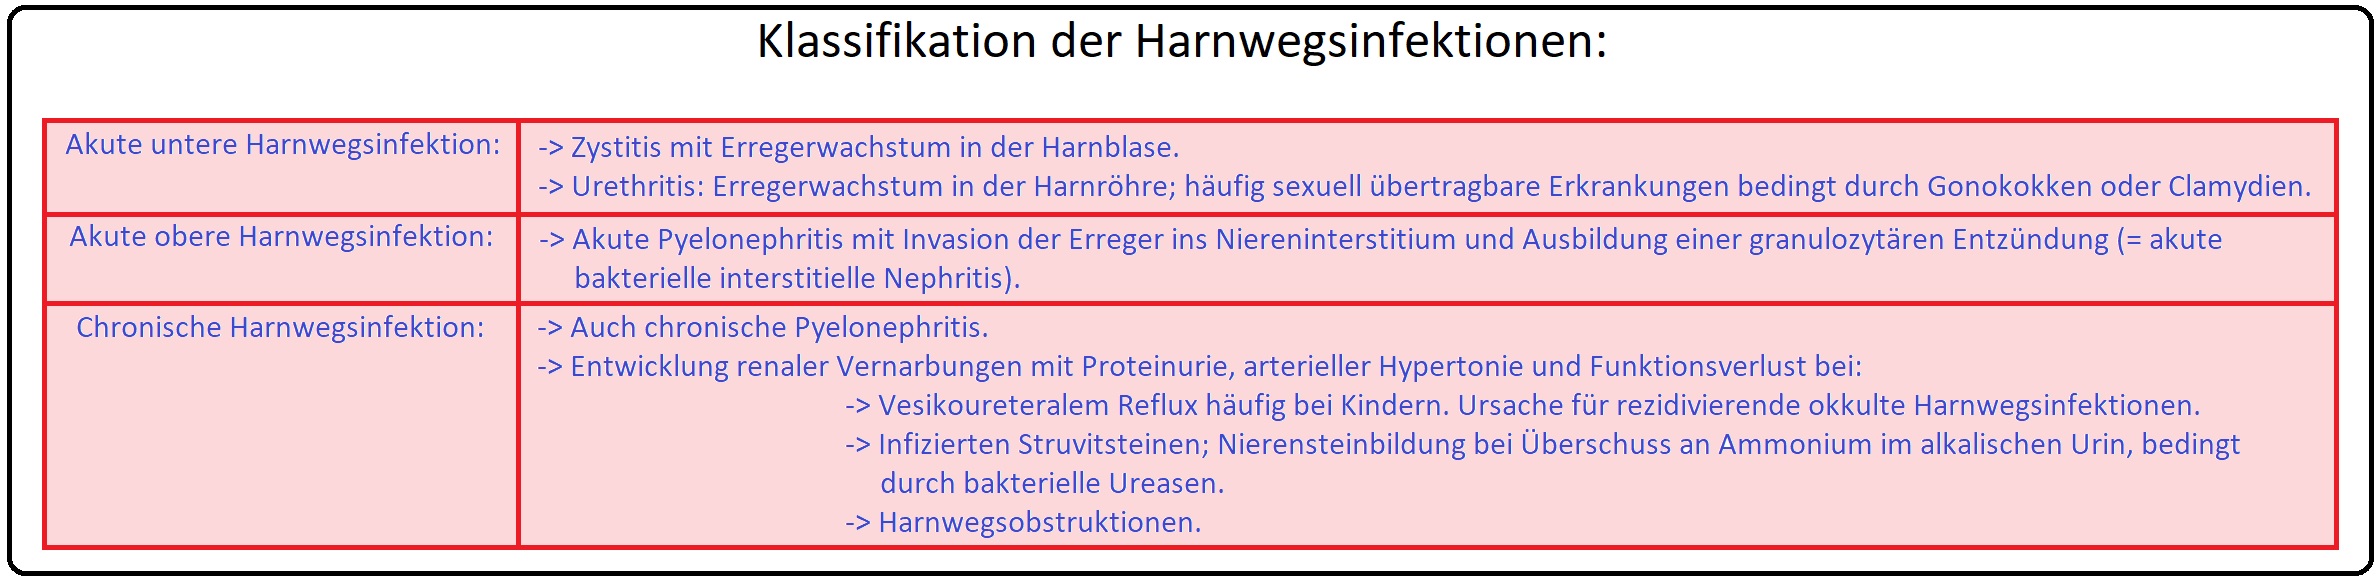 1147 Klassifikation der Harnwegsinfektionen